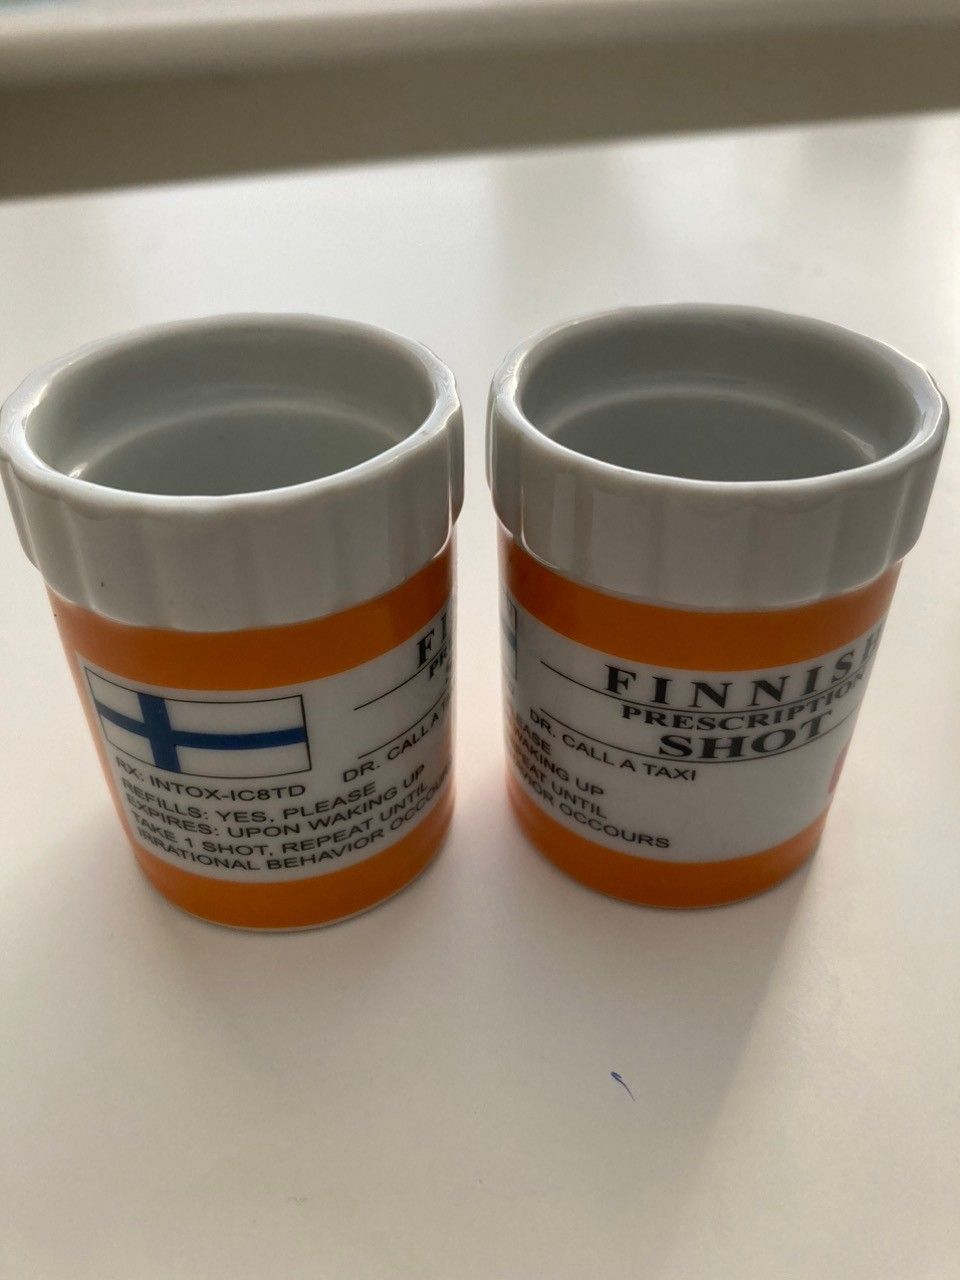 Finnish prescription shottilasit